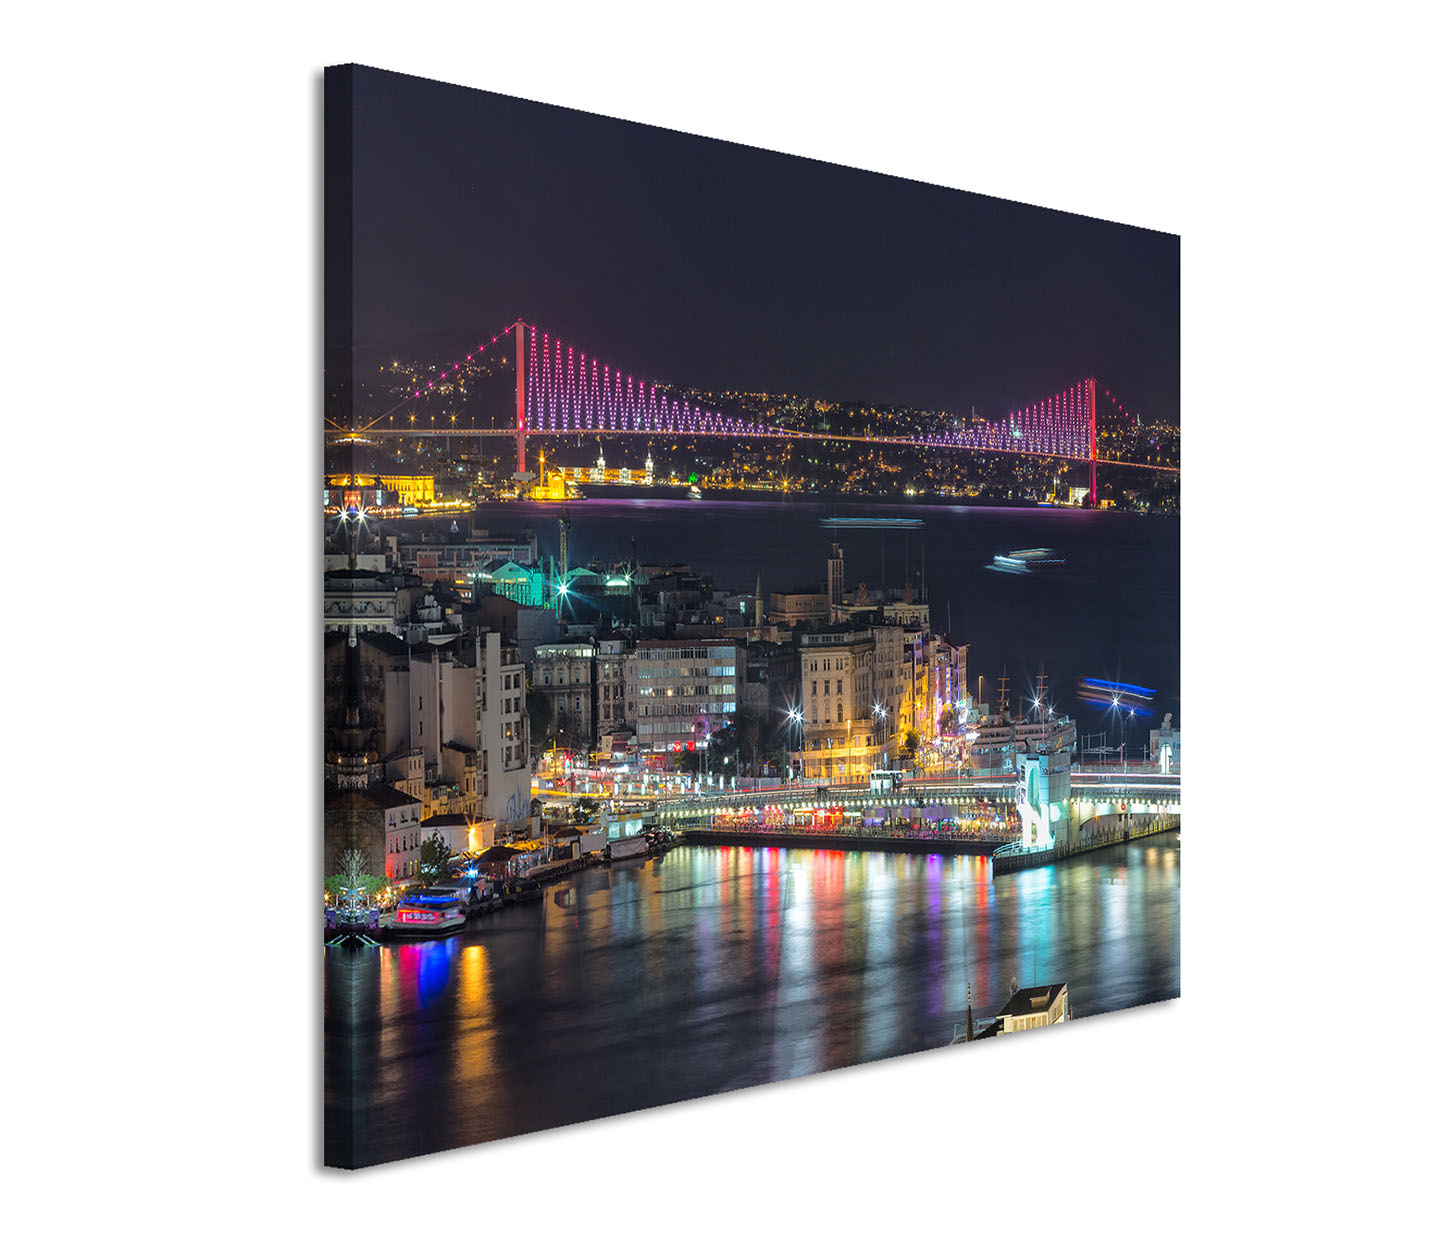 120x80cm Wandbild Istanbul Bosporus Brücke Nacht Lichter